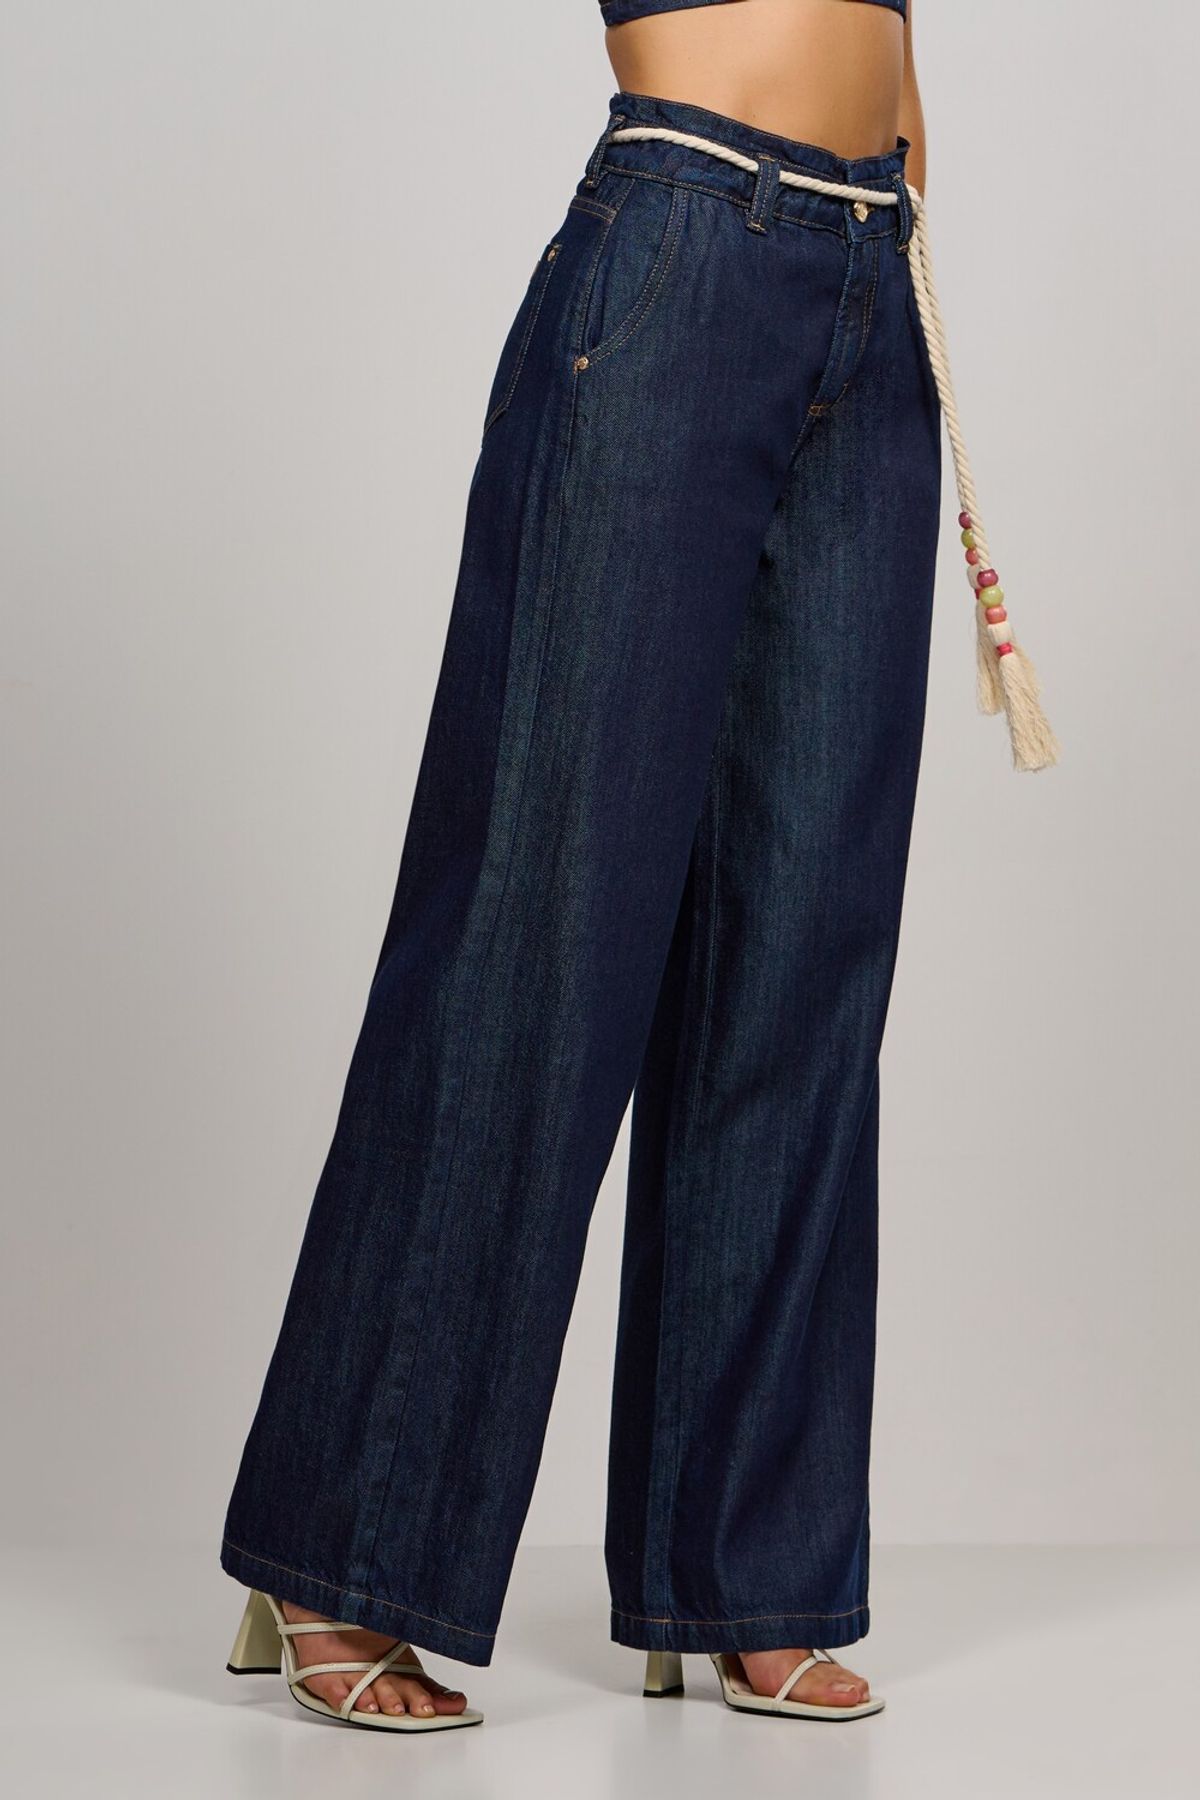 Calça Patogê feminina pantalona jeans cintura alta (G4) CL37030